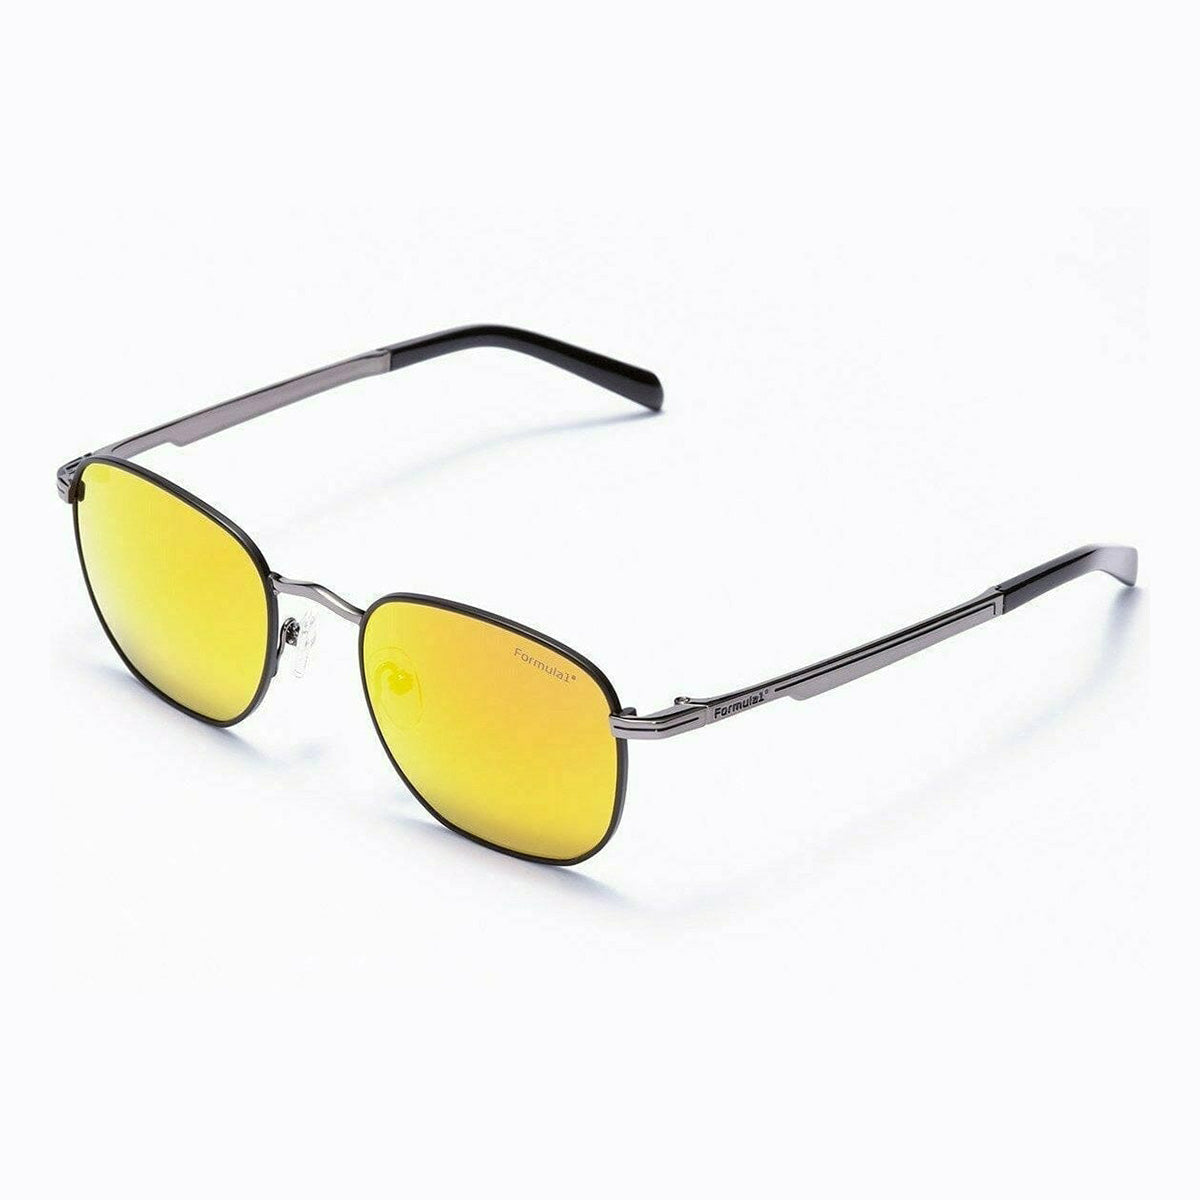 Formula 1 Eyewear Red Collection Unisex Sunglasses -  On The Marbles Gun Black